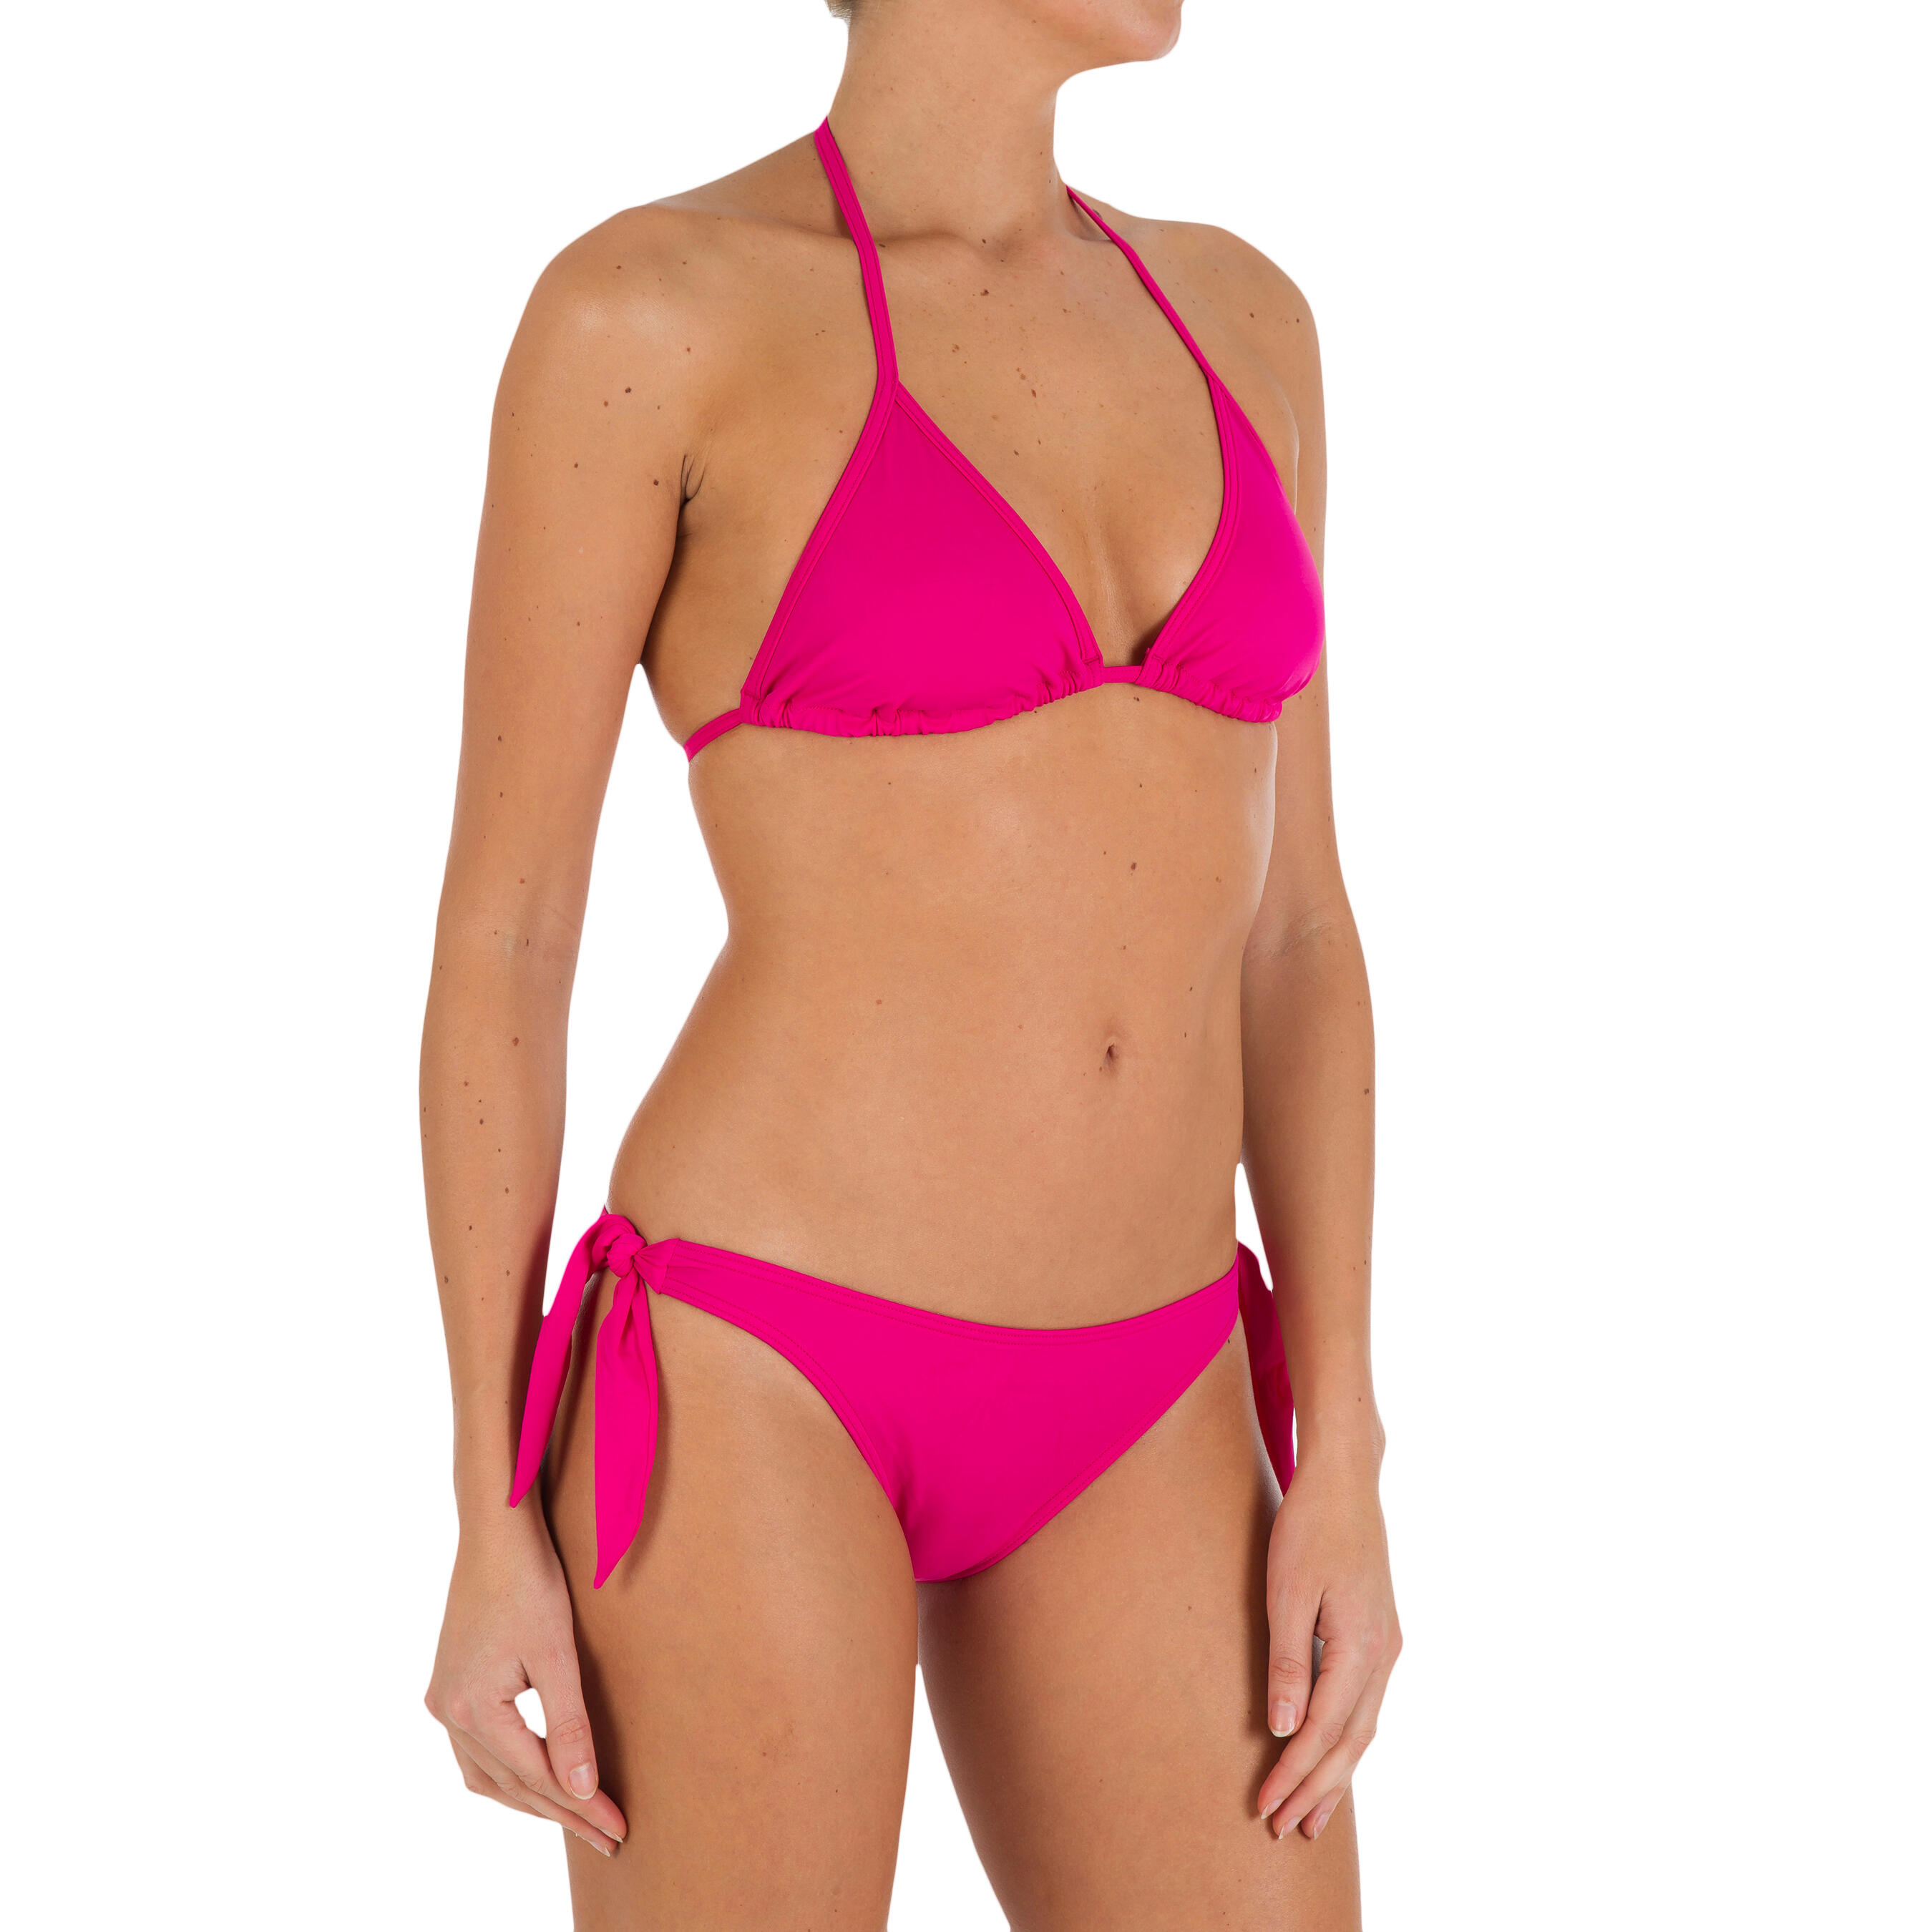 MAE women's triangle swimsuit - Plain pink 6/9